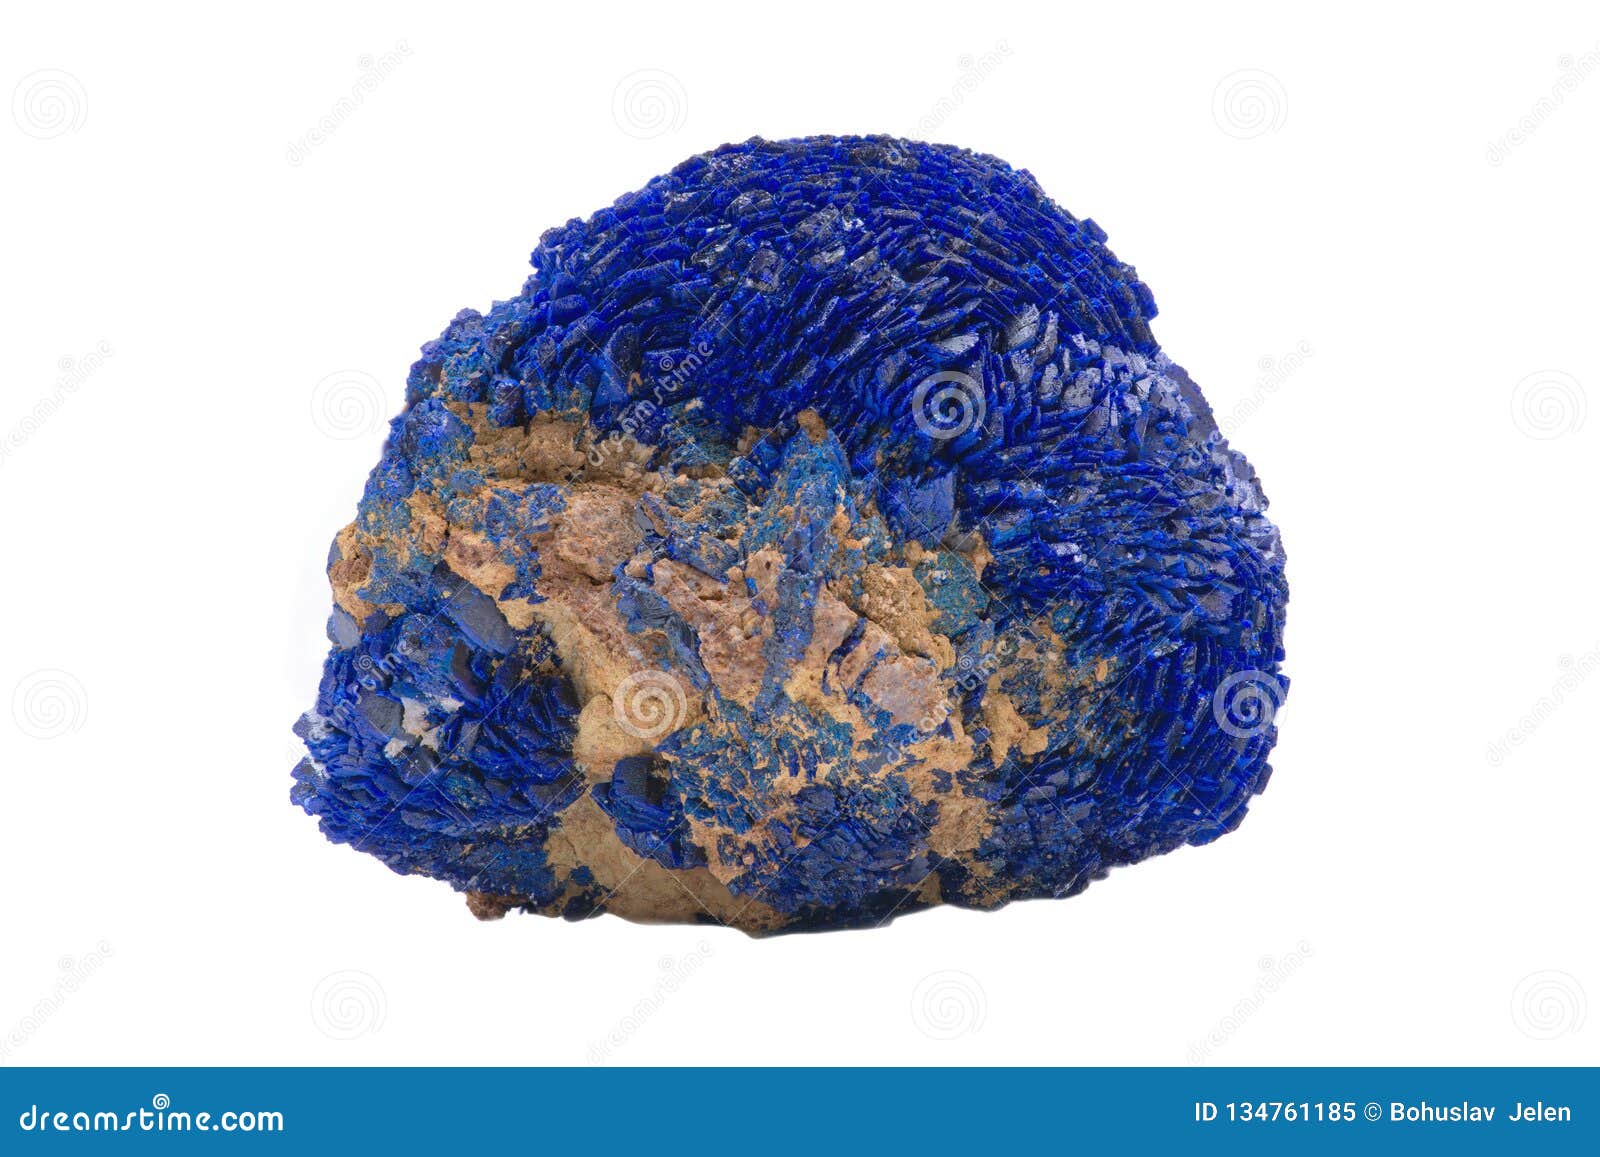 bright blue full azurite nodule from russia  on white